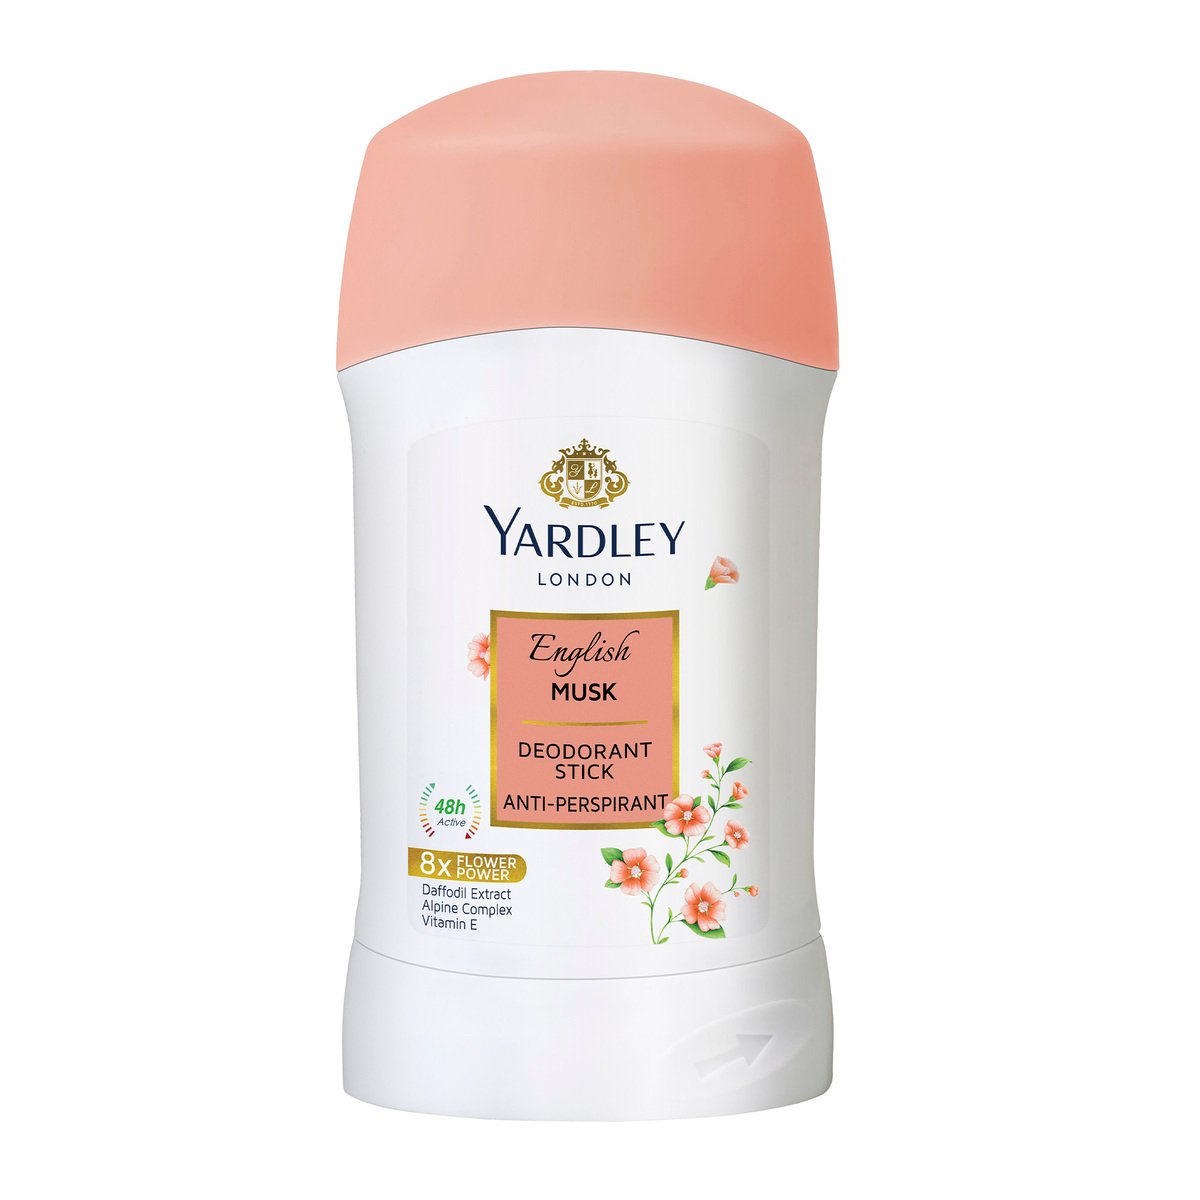 Yardley Deodorant Stick Anti-Perspirant English Musk 40g